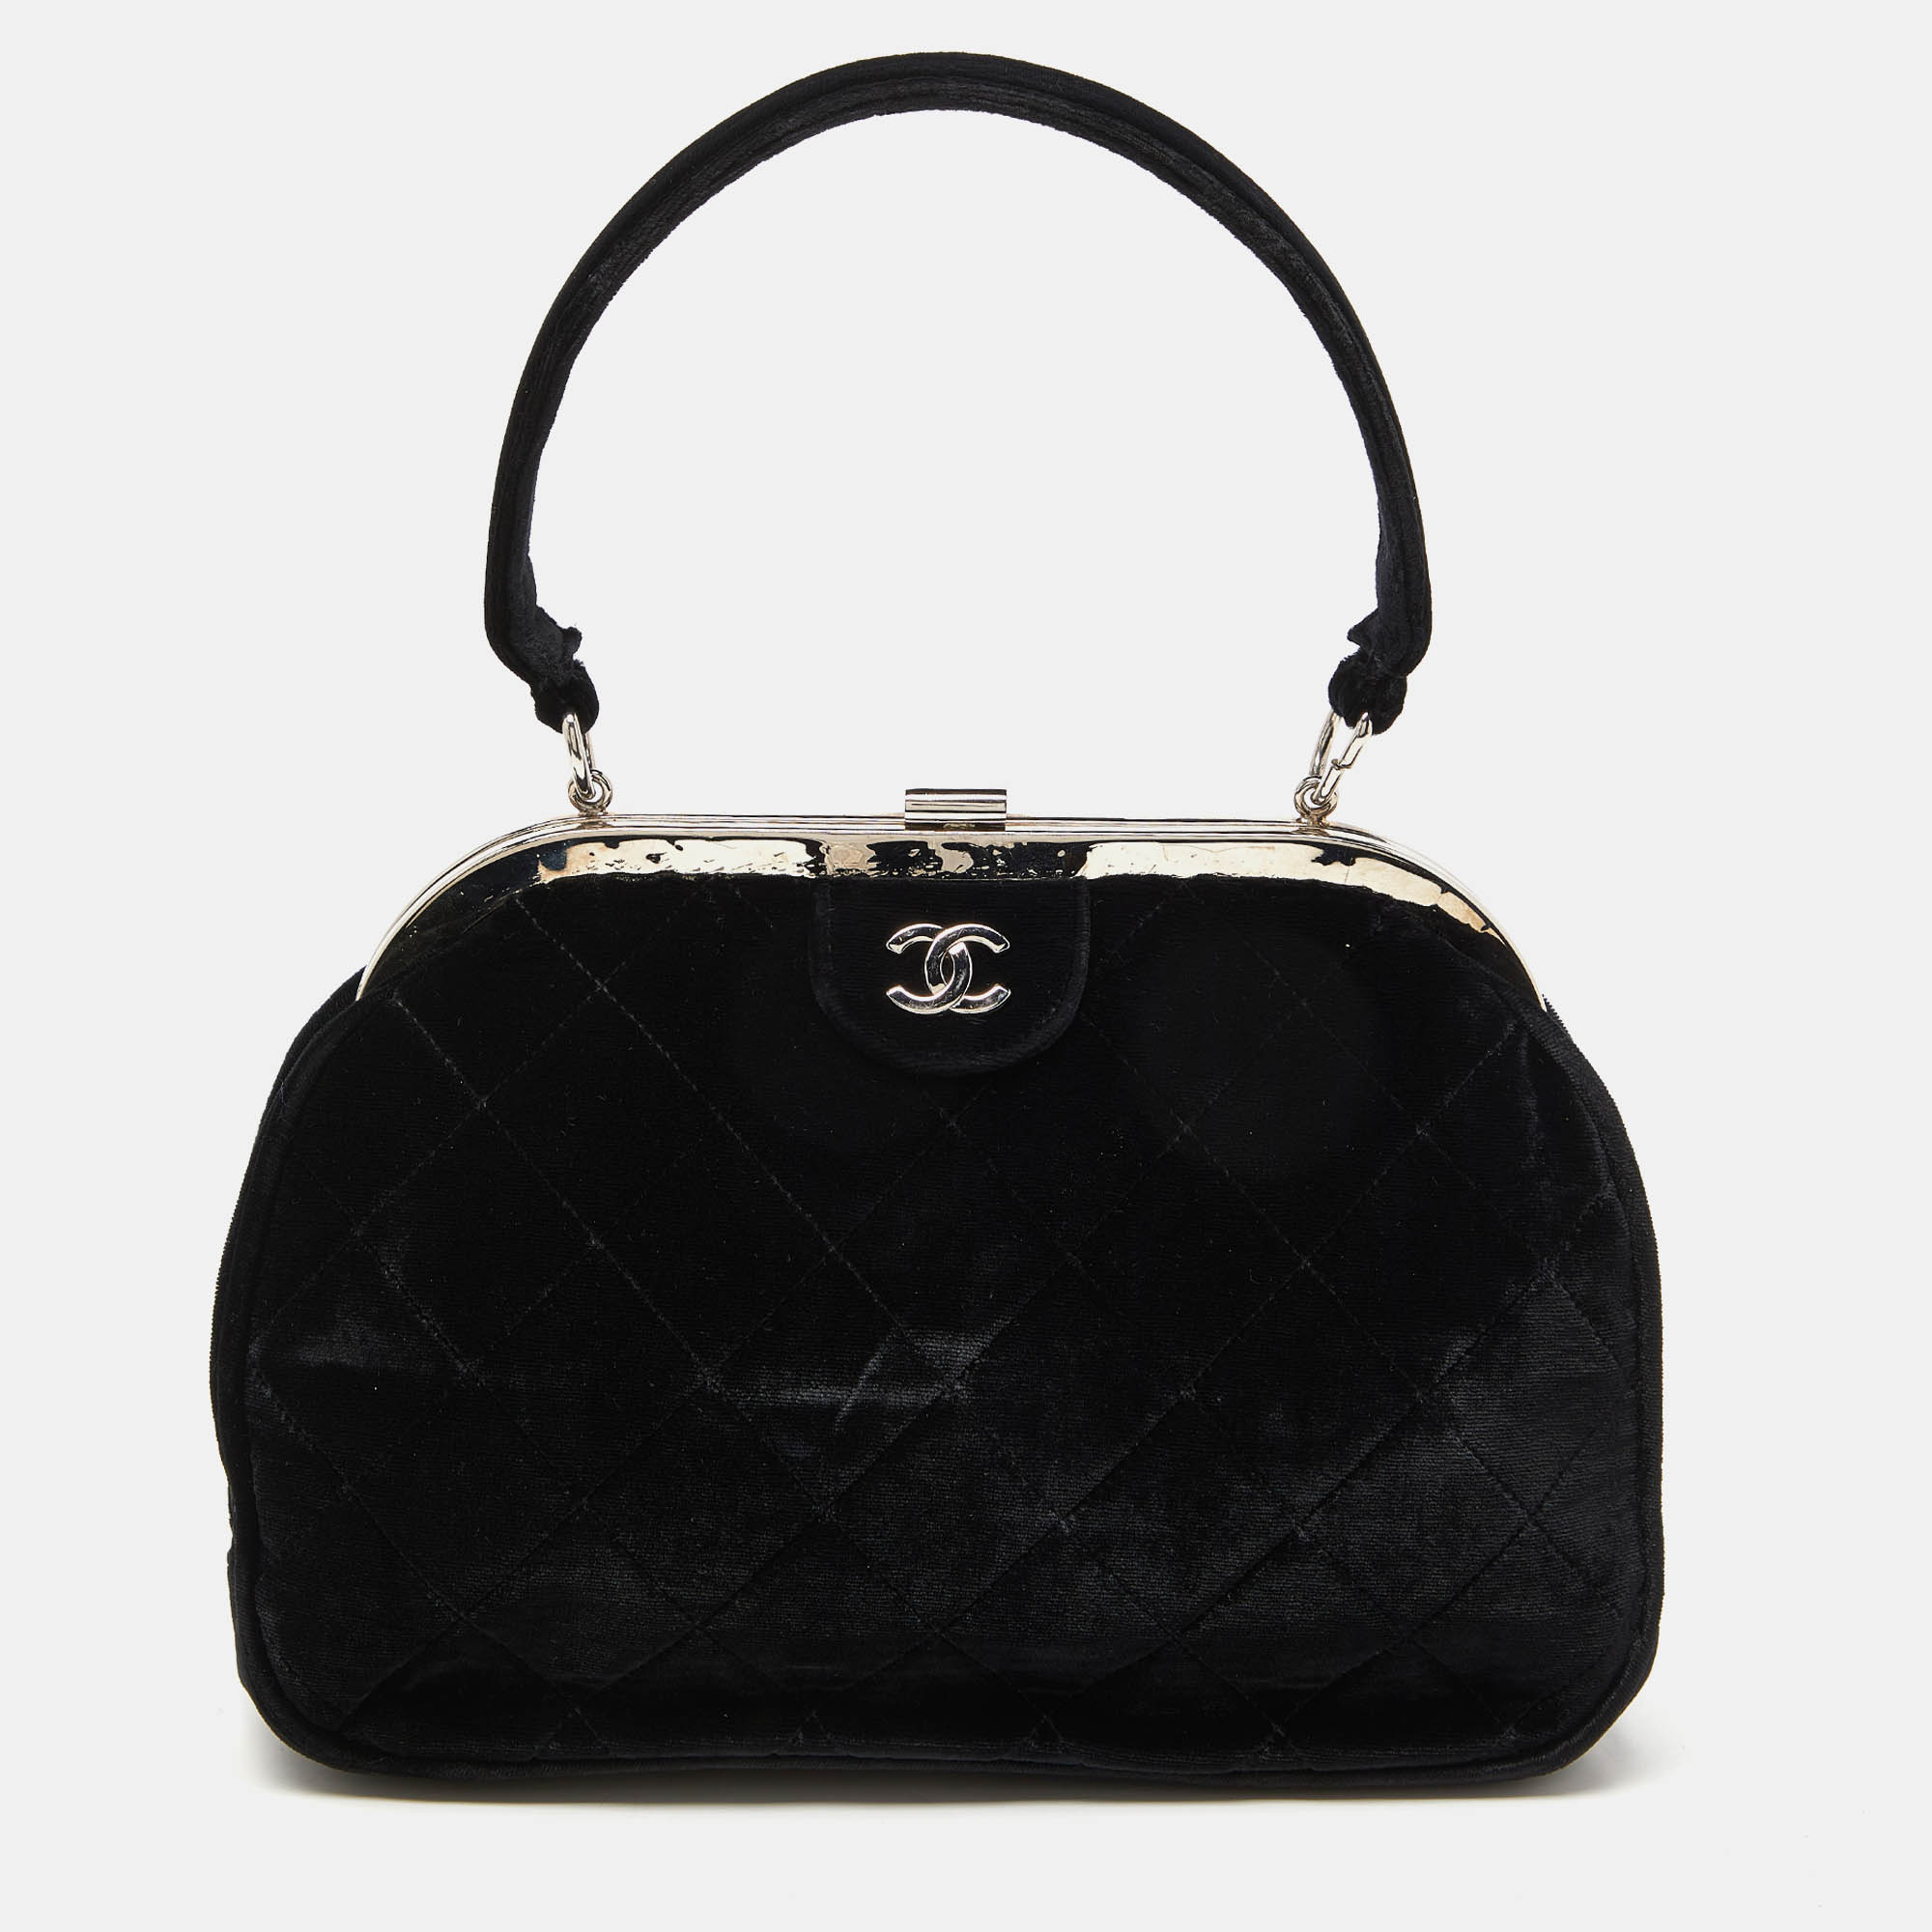 Pre-owned Chanel Black Quilted Velvet Cc Frame Top Handle Bag